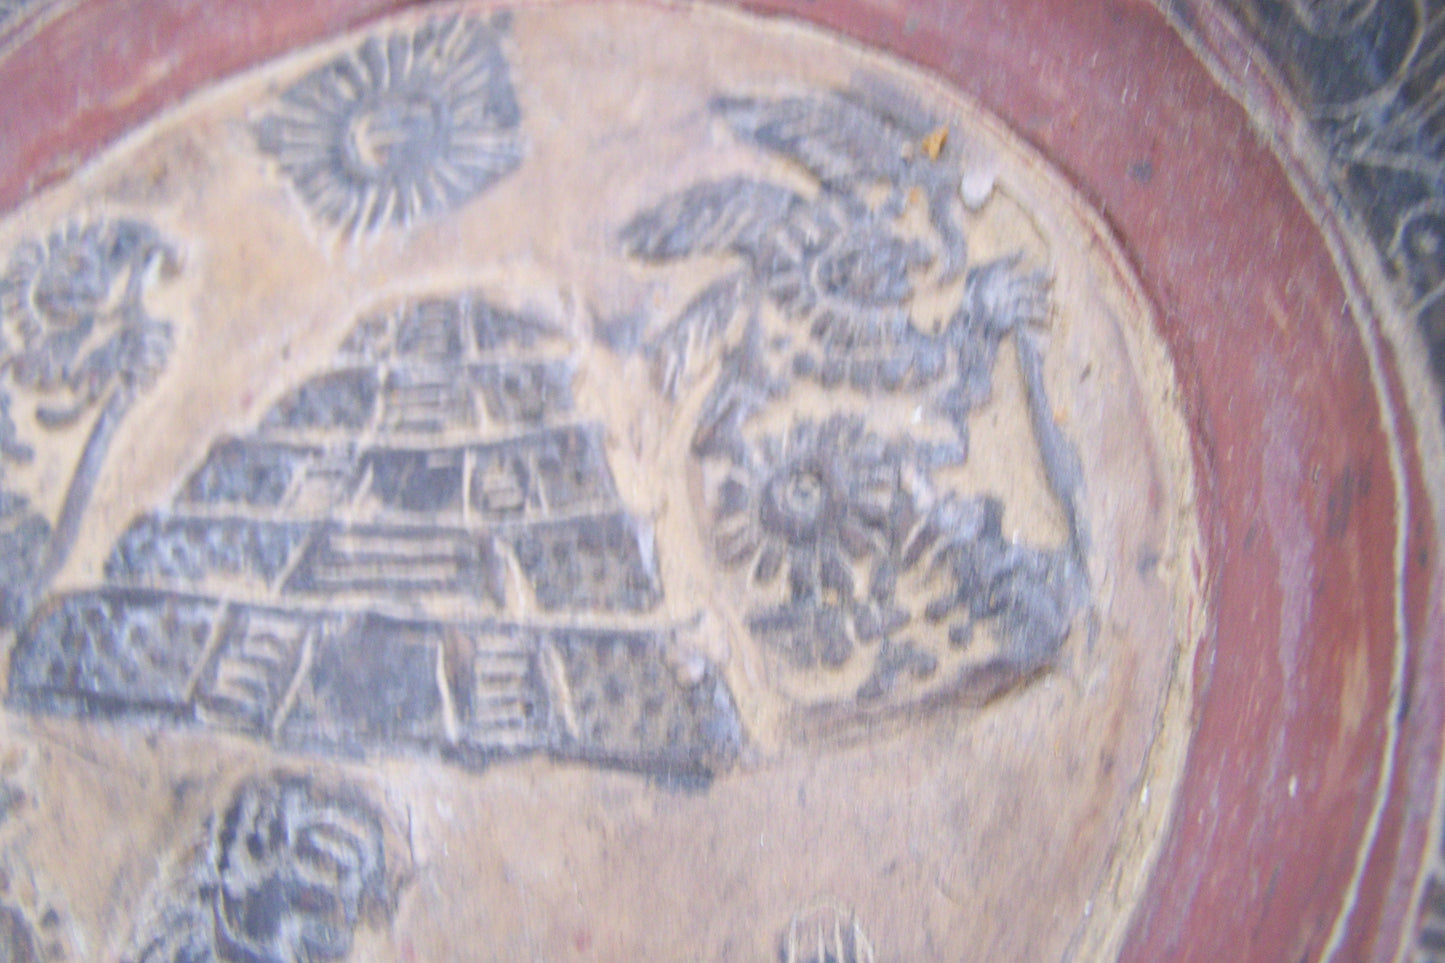 Vintage 1960s Molcajete Tripod Bowl with Ancient Mexican Designs, Aztec, Maya, etc. - Mexico